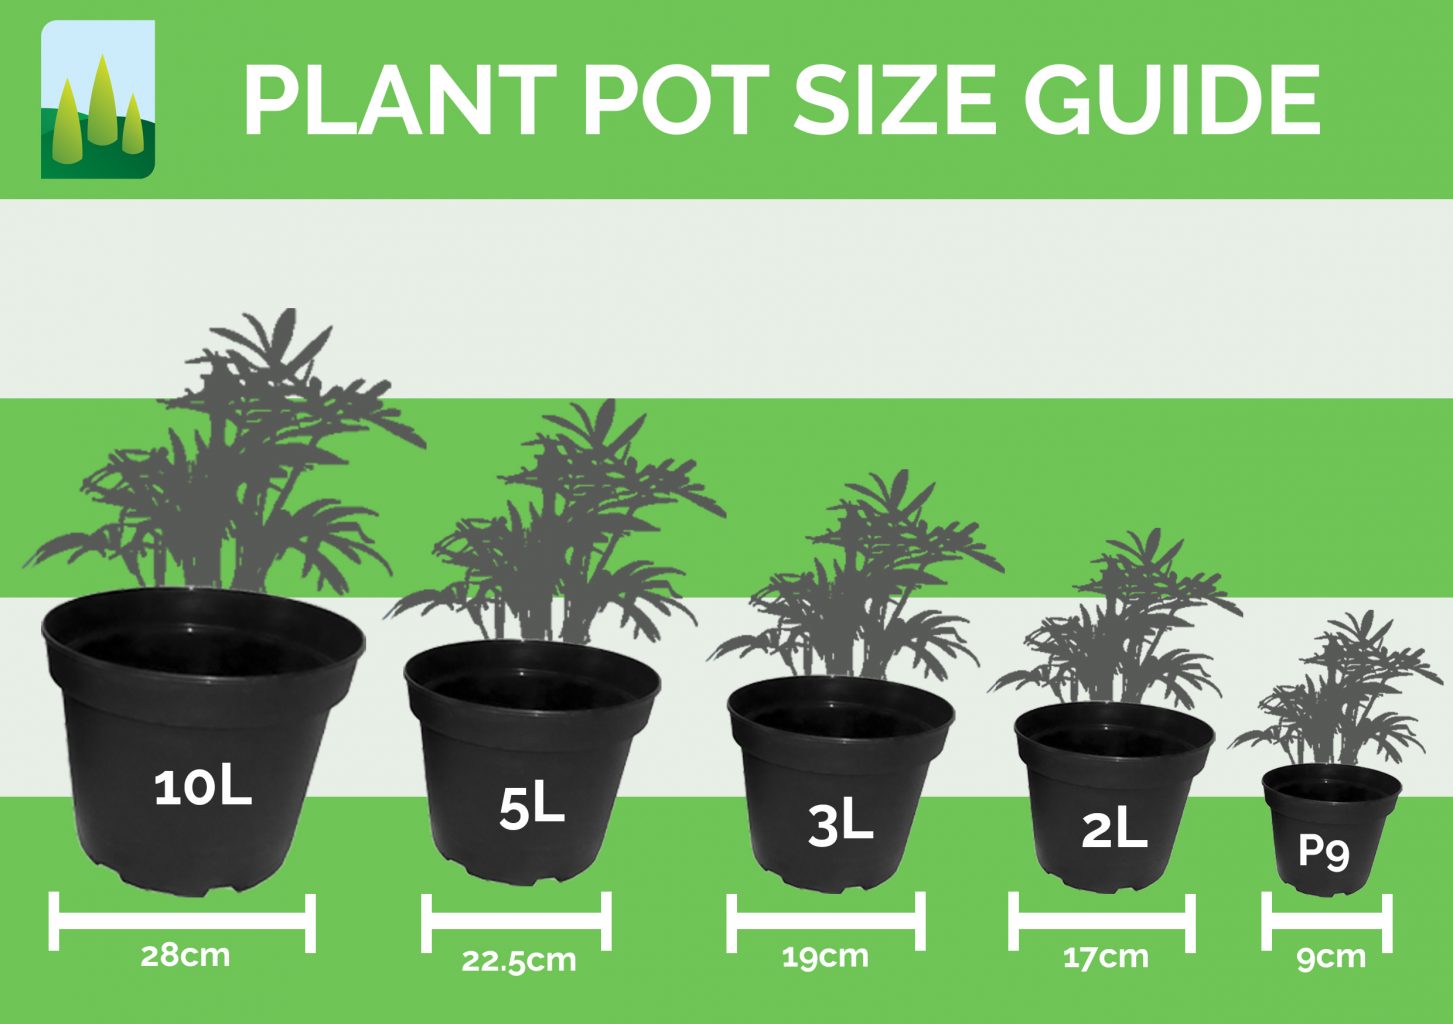 https://johnsonsnurseries.co.uk/wp-content/uploads/2019/08/Plant-pot-size-guide.jpg